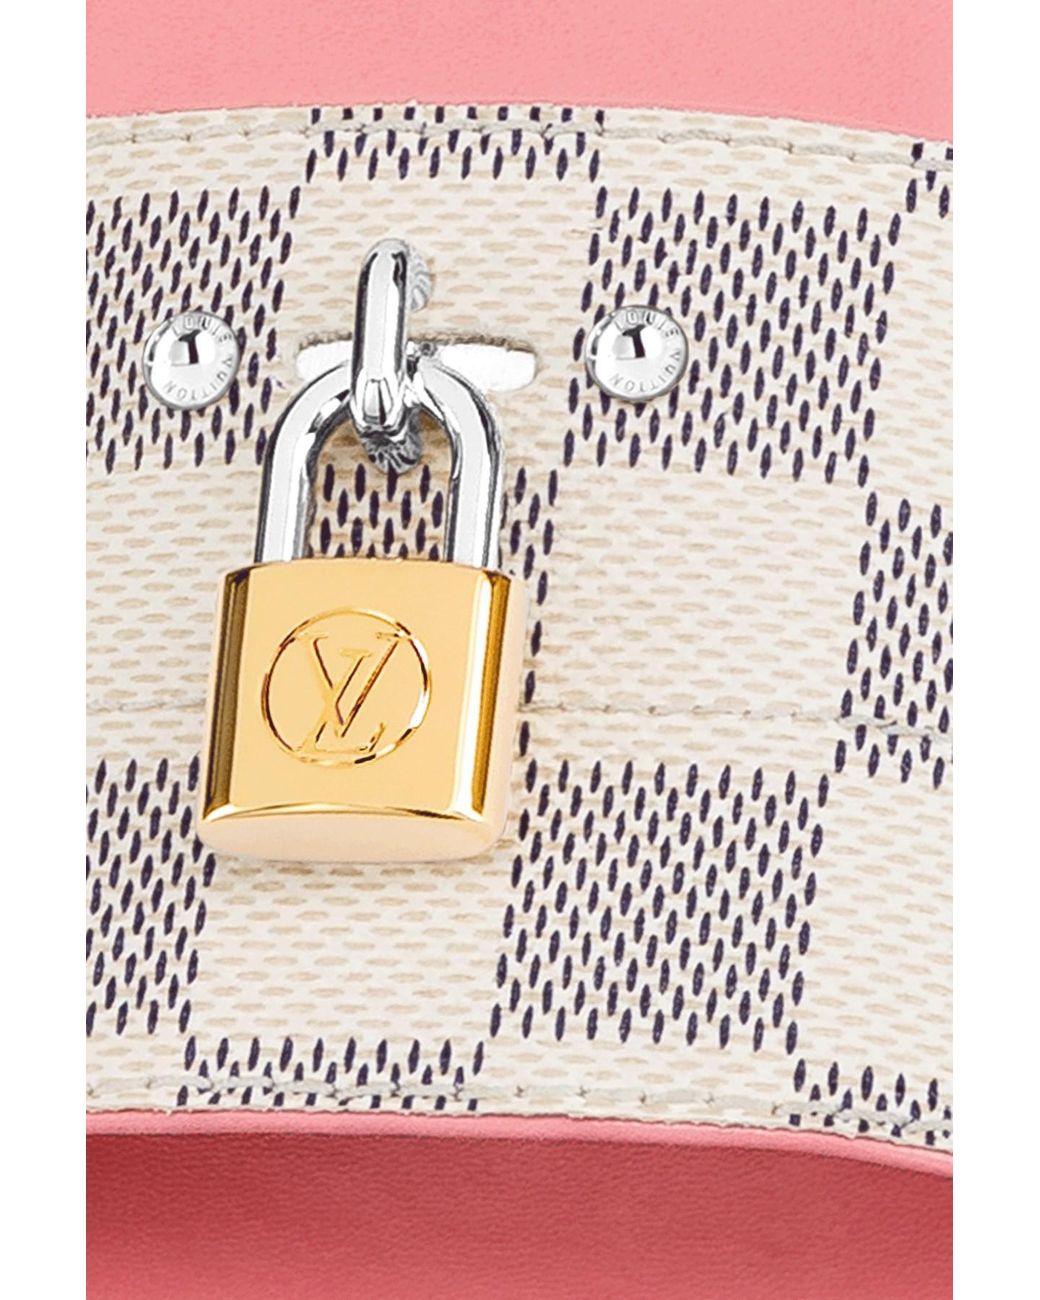 Louis Vuitton Lock It Mule Gold. Size 38.0